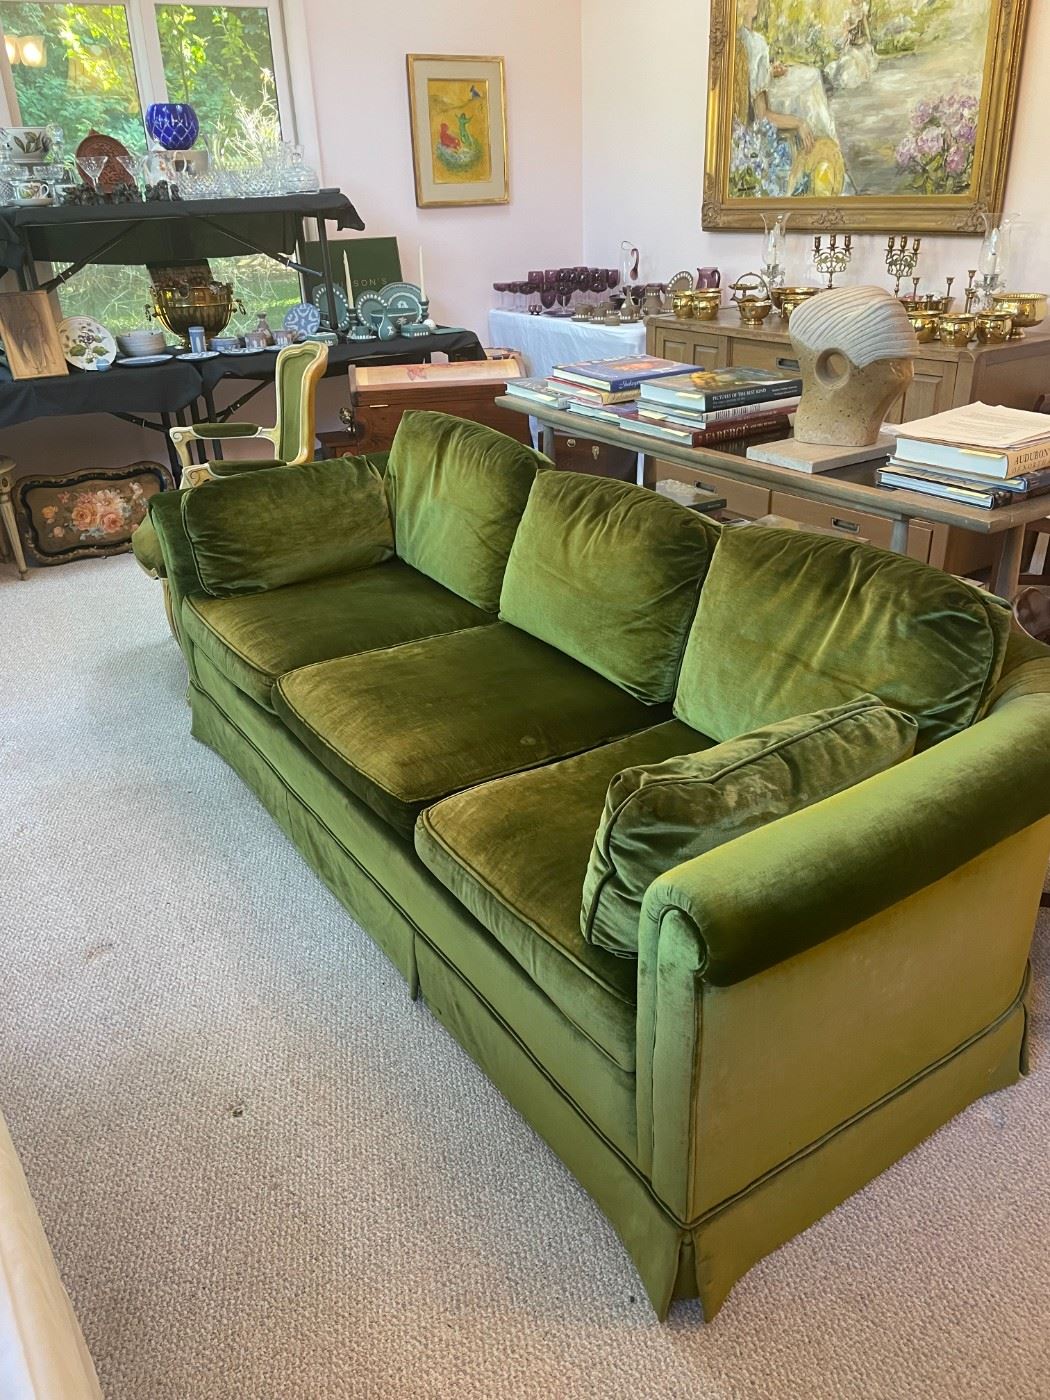 Sublime Baker Furniture Co. emerald green velvet sofa, c. 1960's, in excellent vintage condition